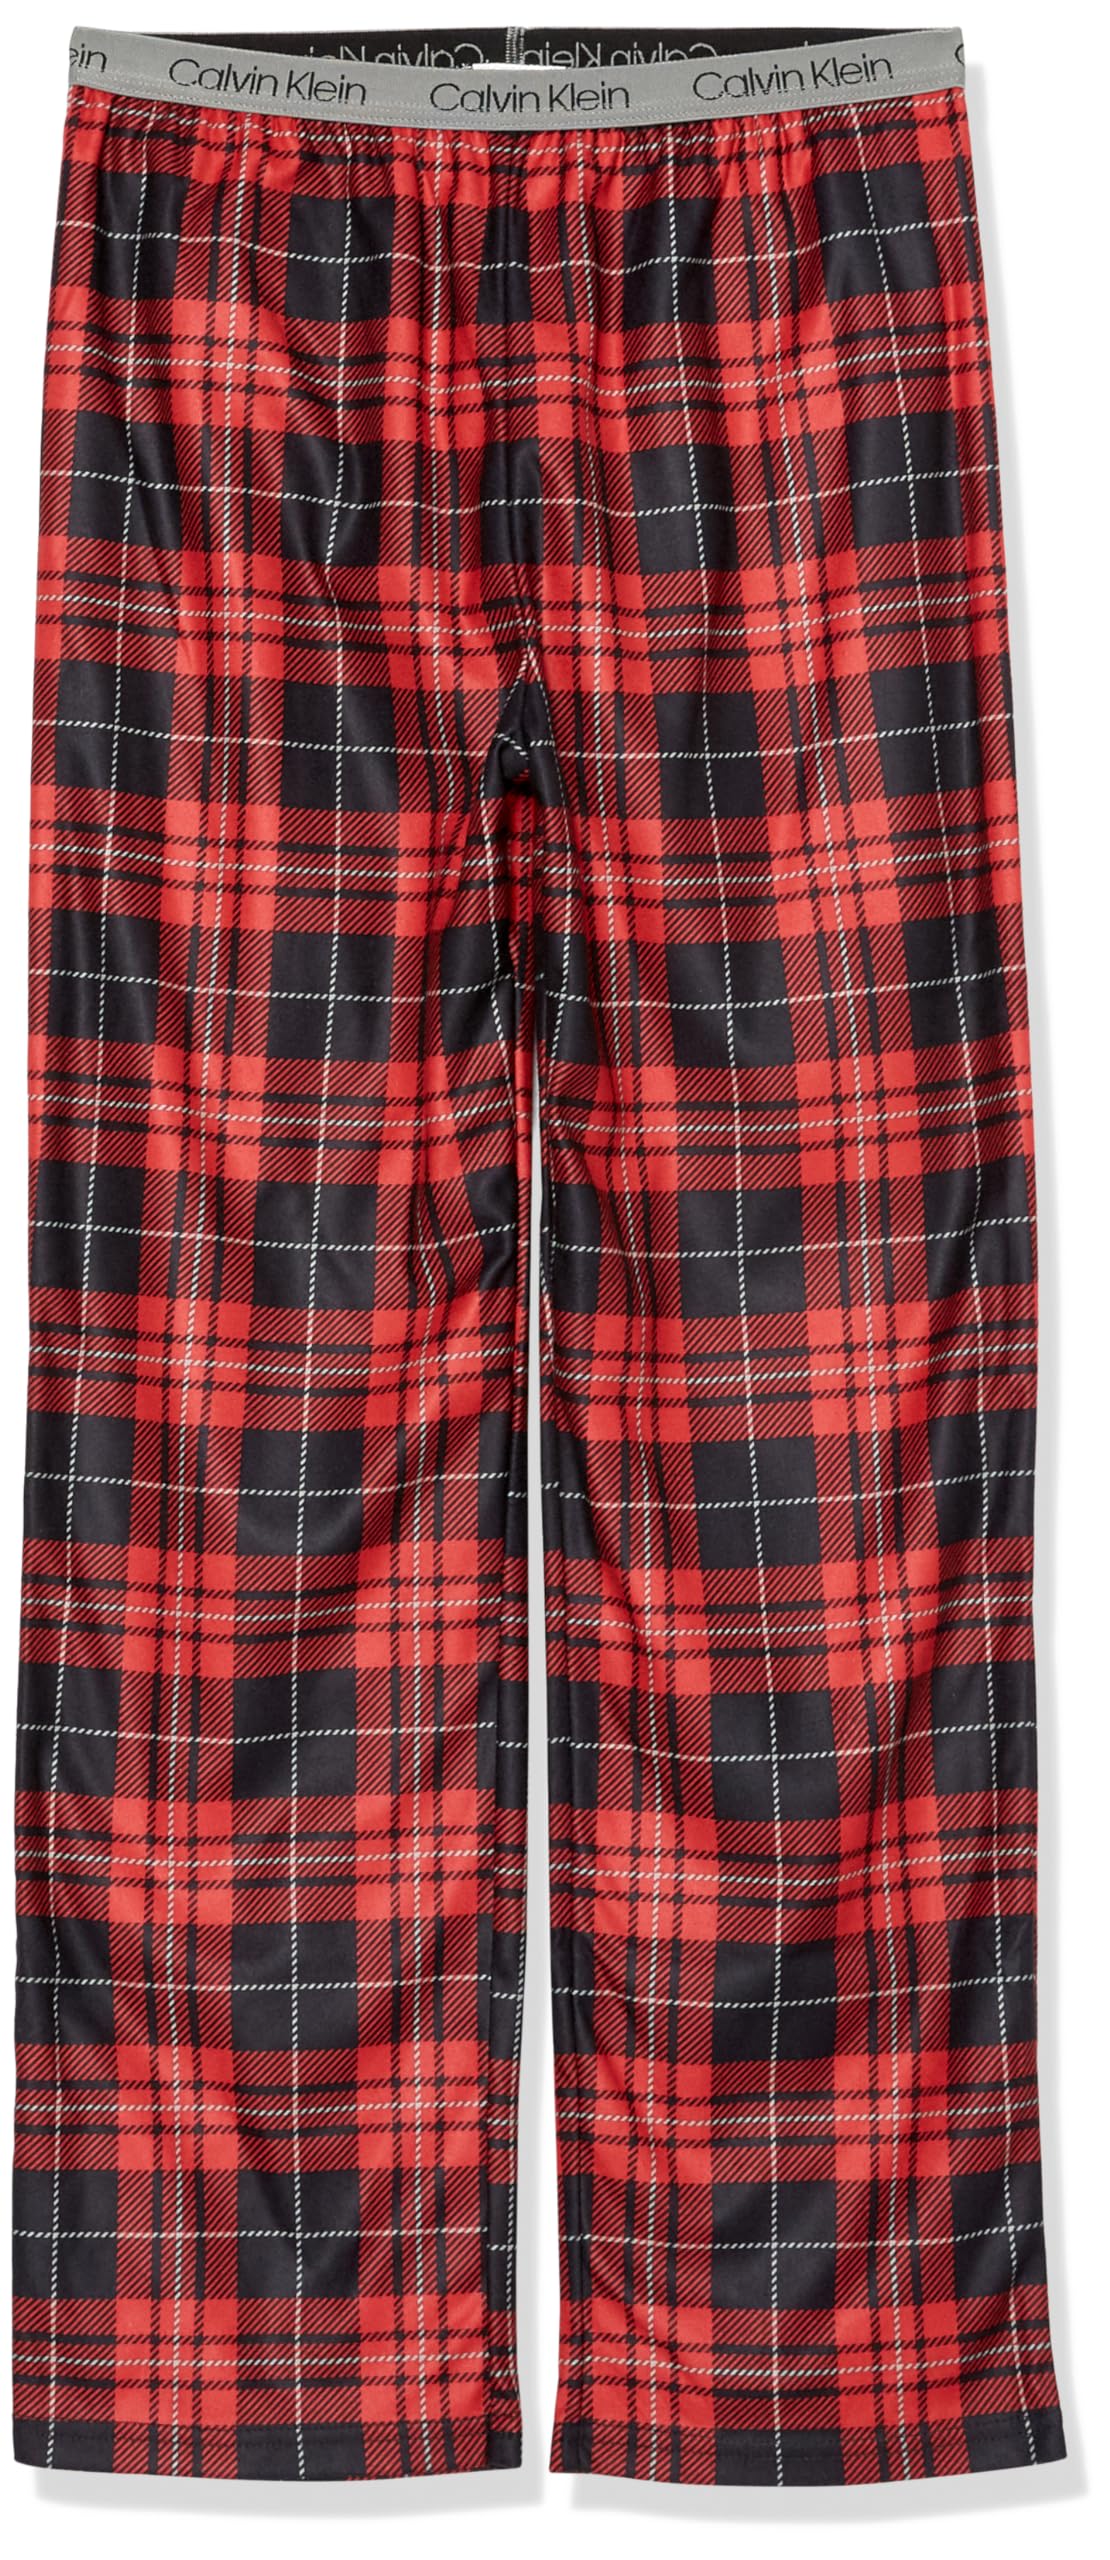 Calvin Klein Boys' Super-Soft Micro-Brushed Fabric Pajama Set Pj